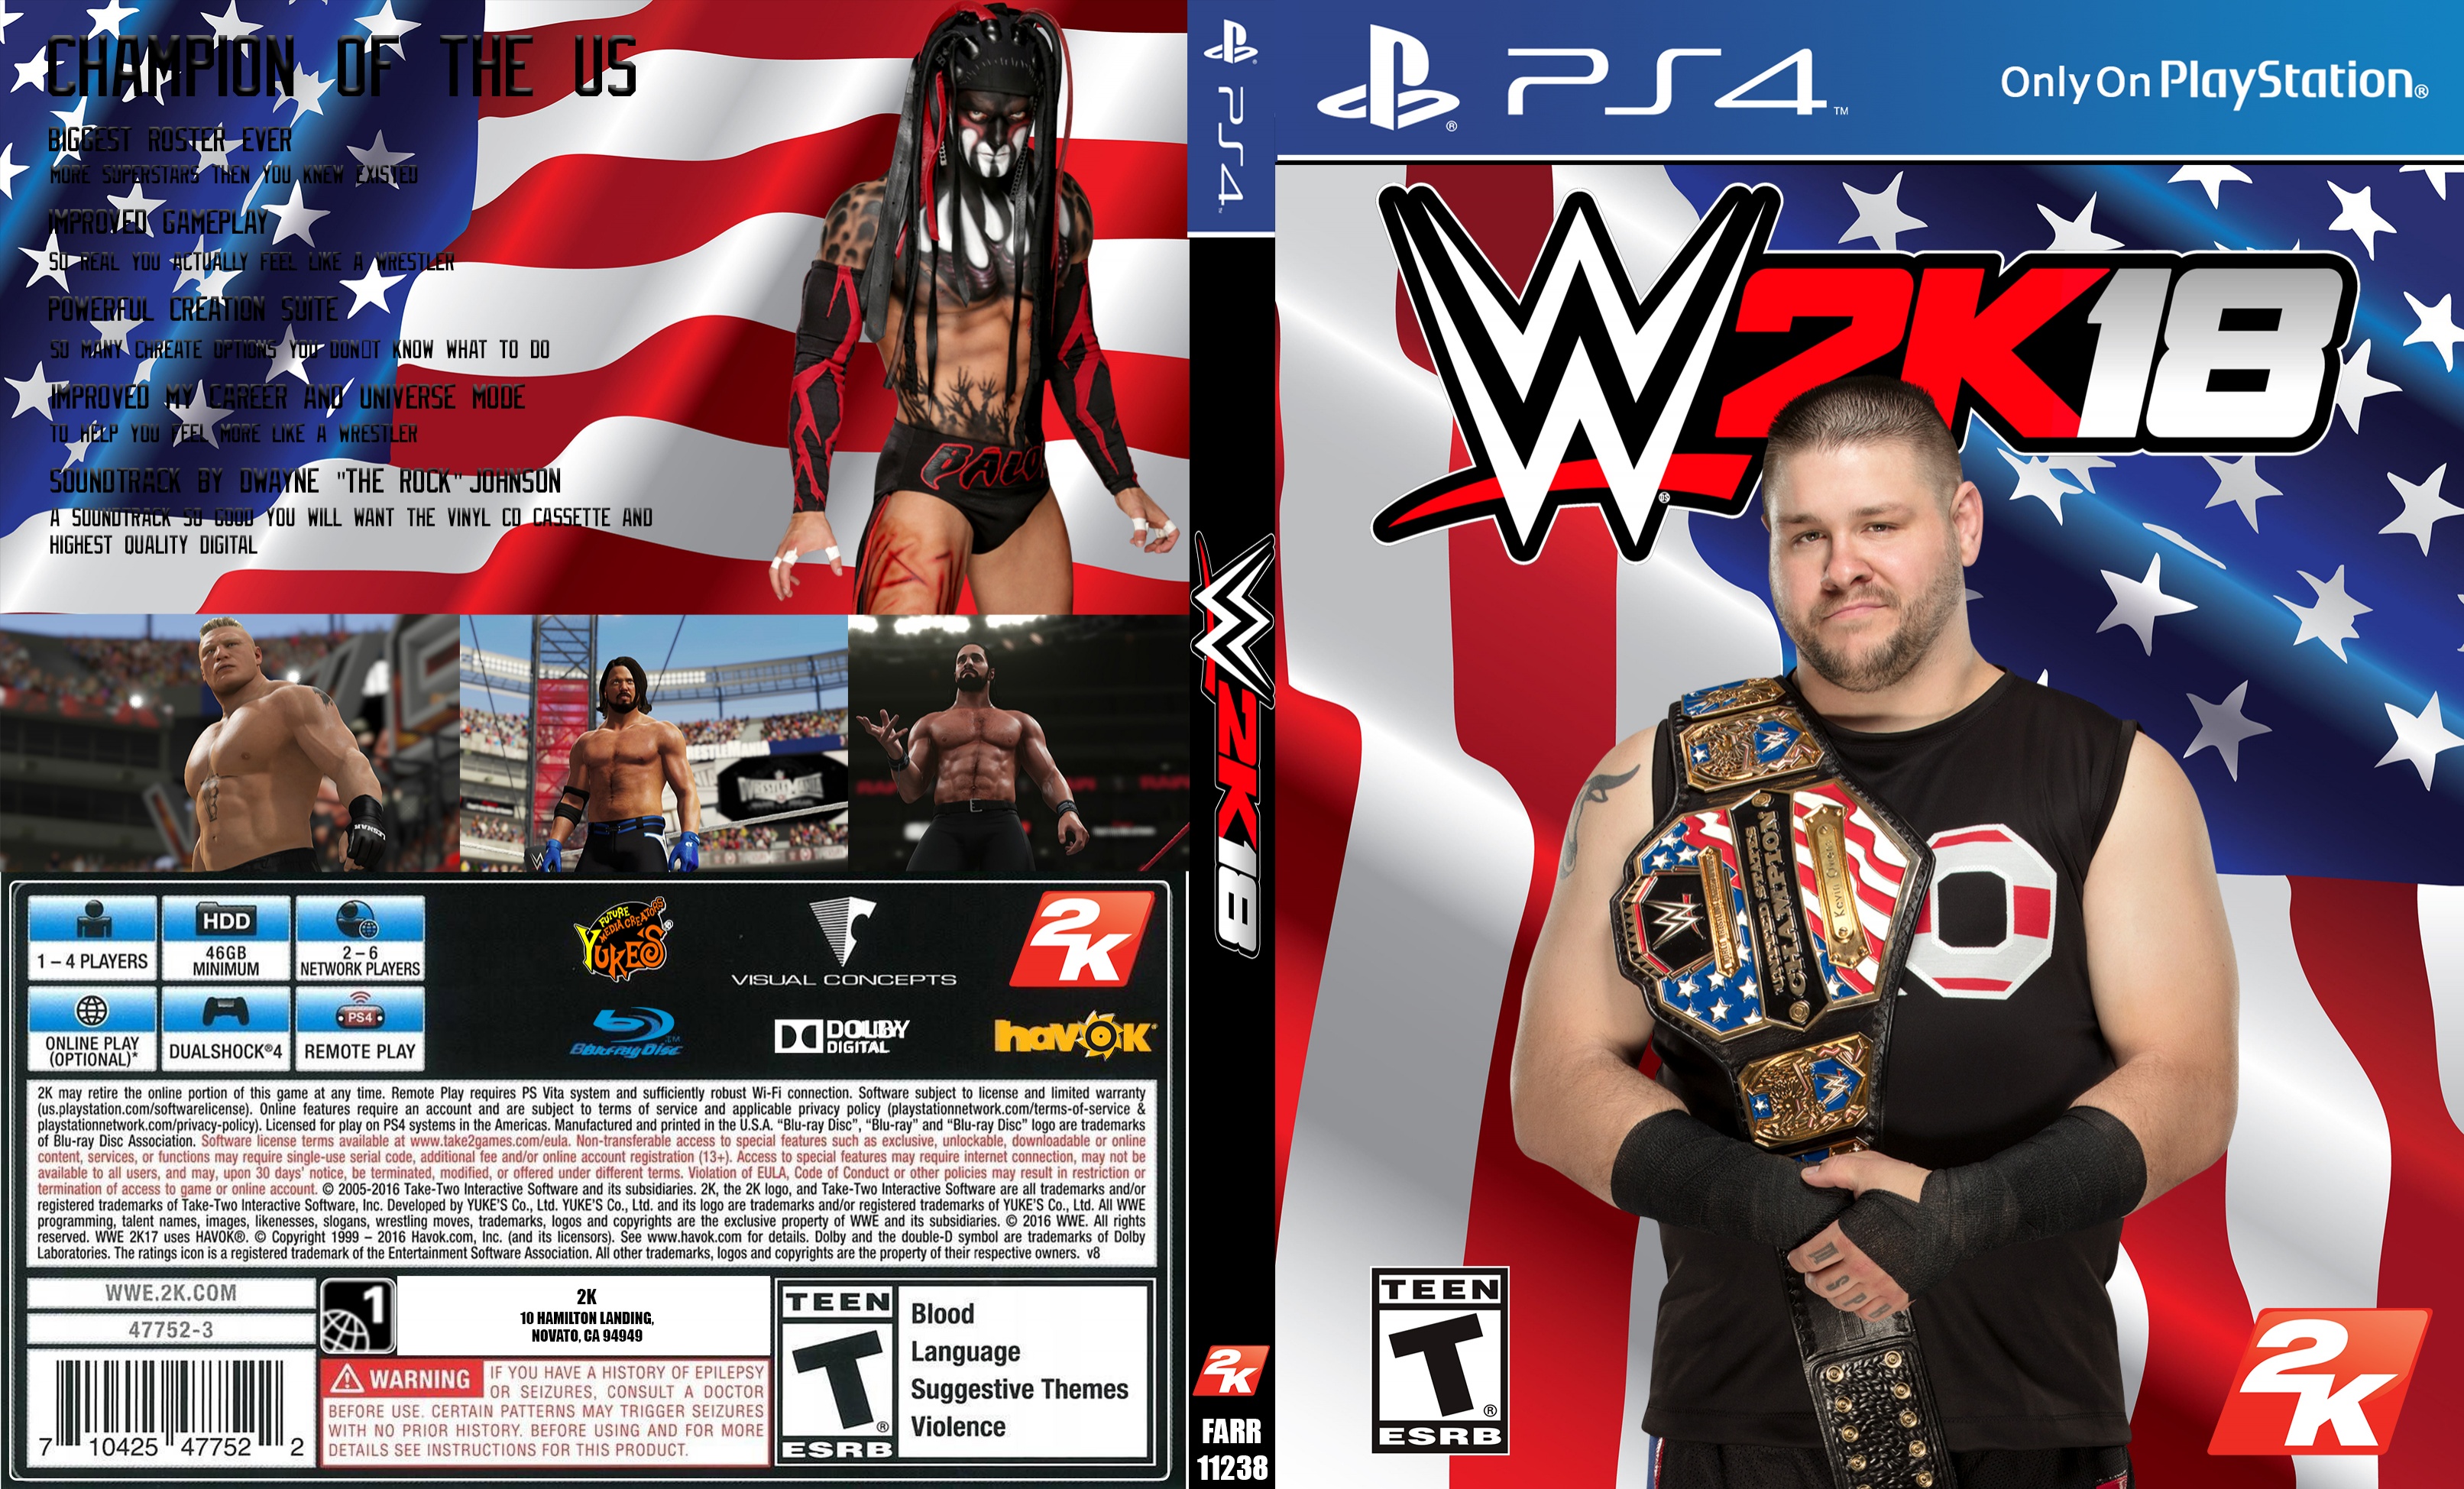 WWE 2K18 box cover